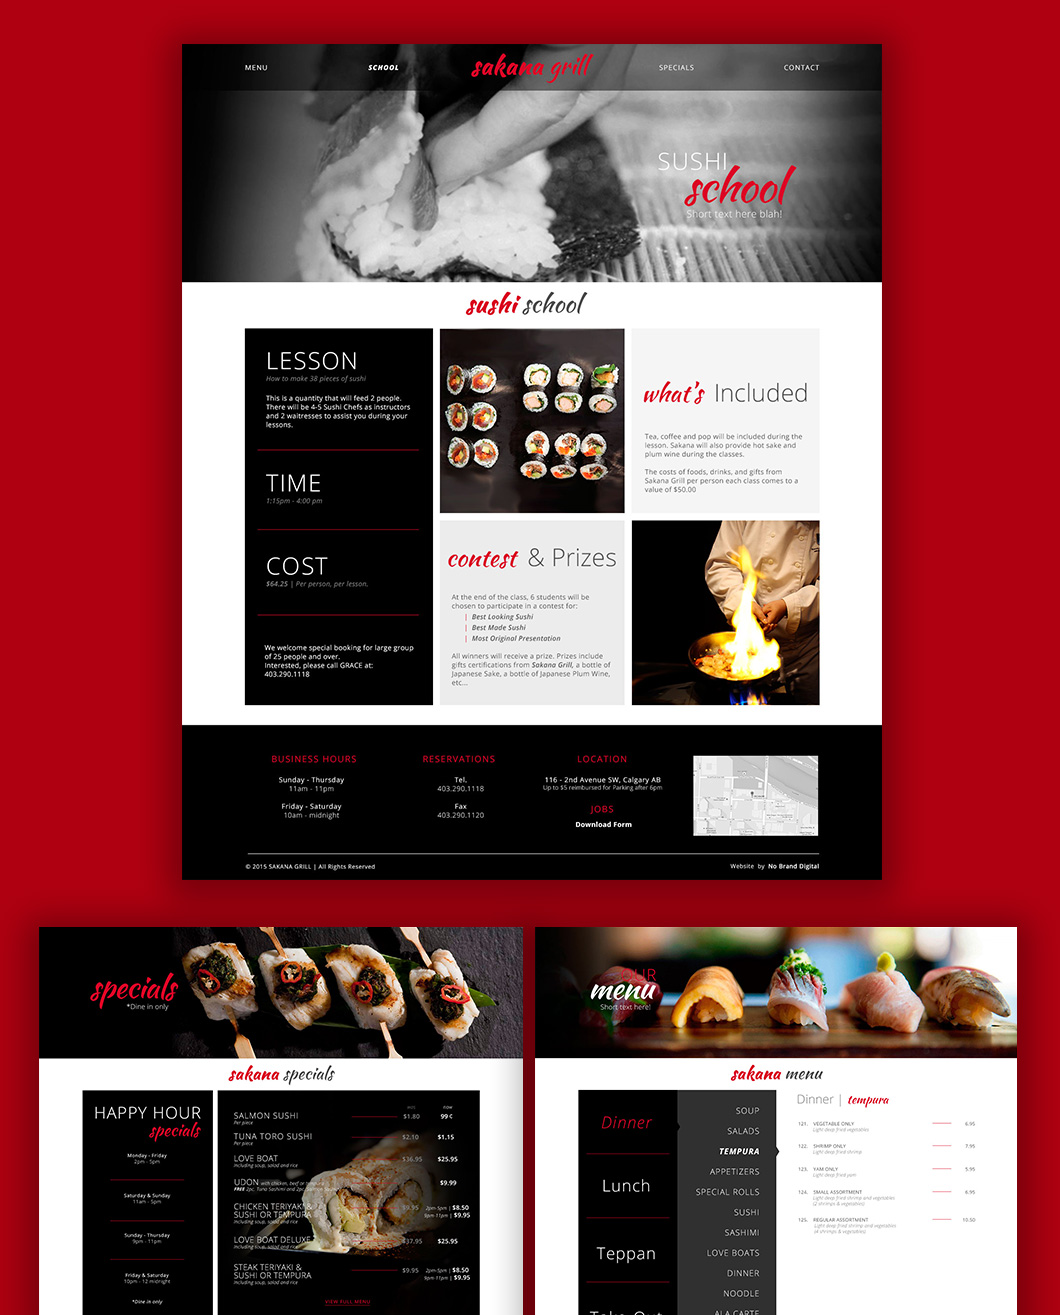 Sakana Grill website design, graphic design